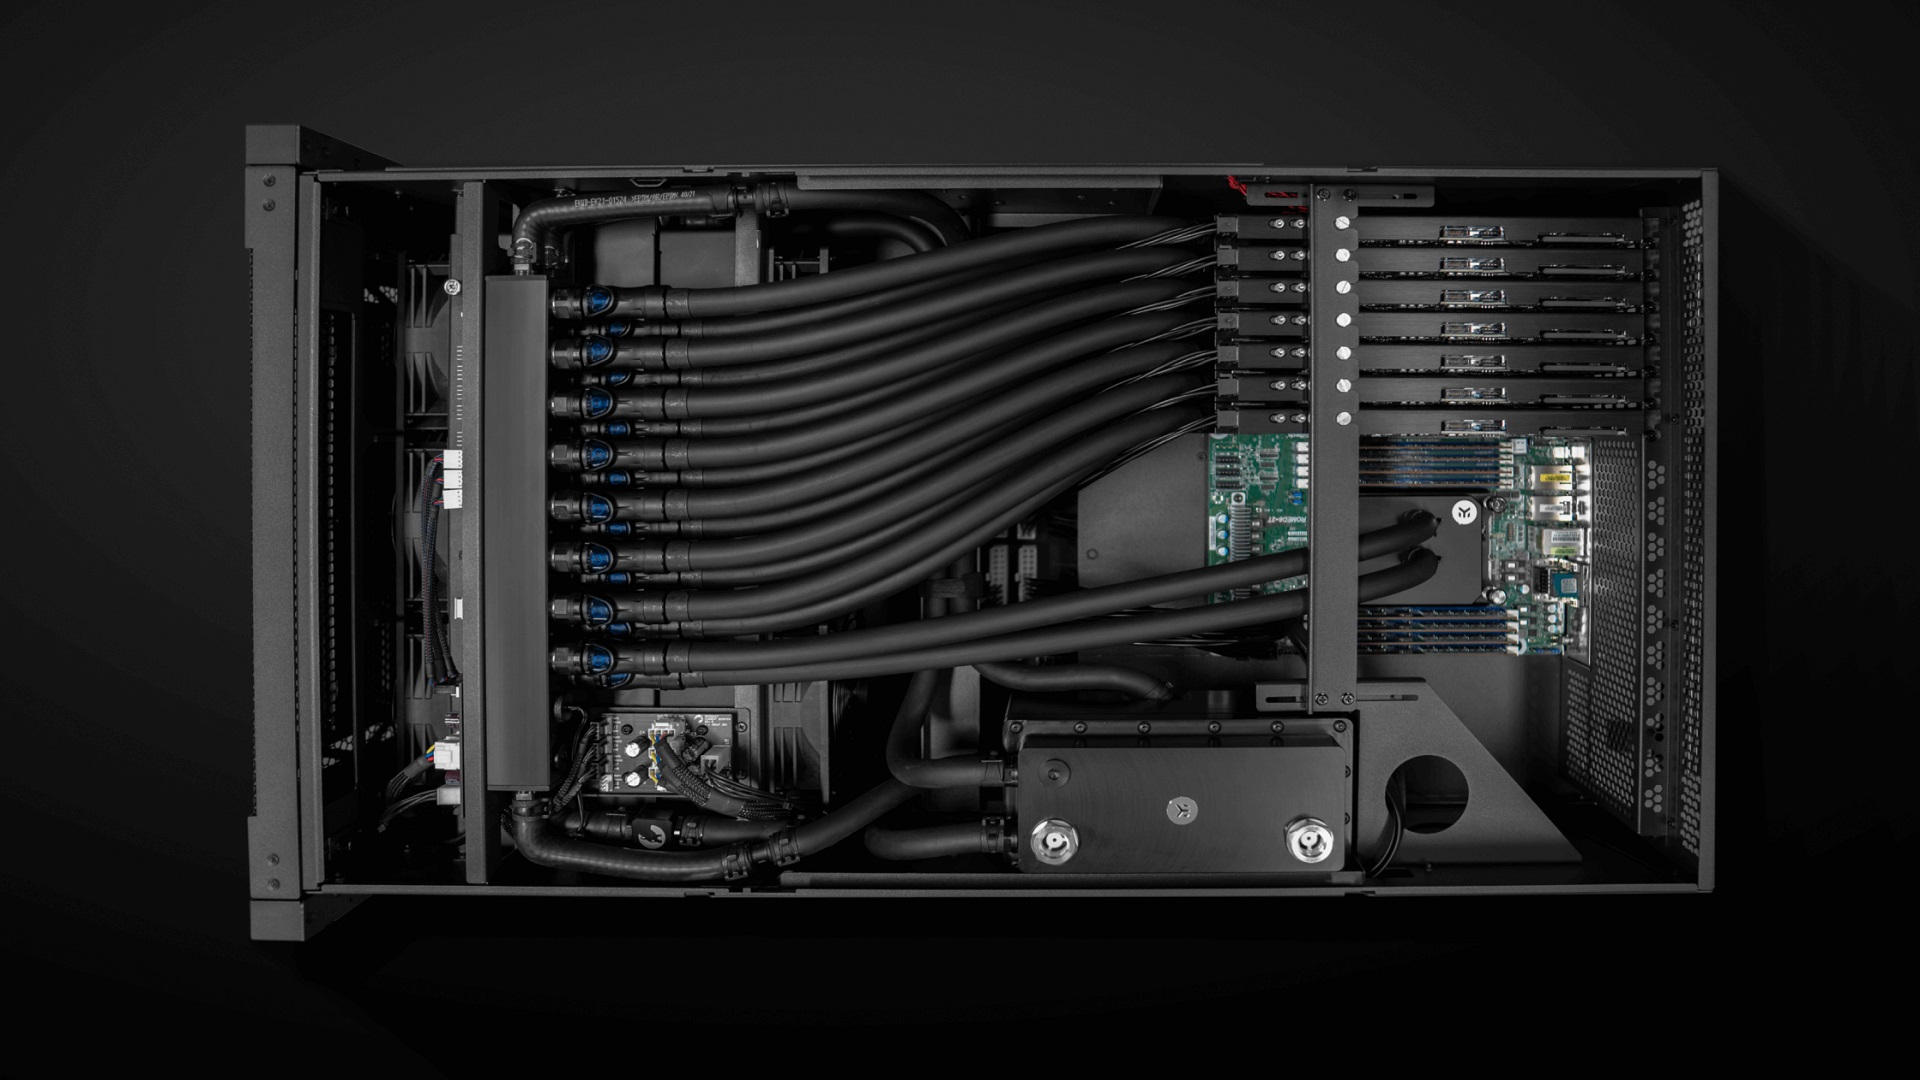 EK Fluid Works Compute Series X7000-RM rackmount server with 7 liquid-cooled GPUs